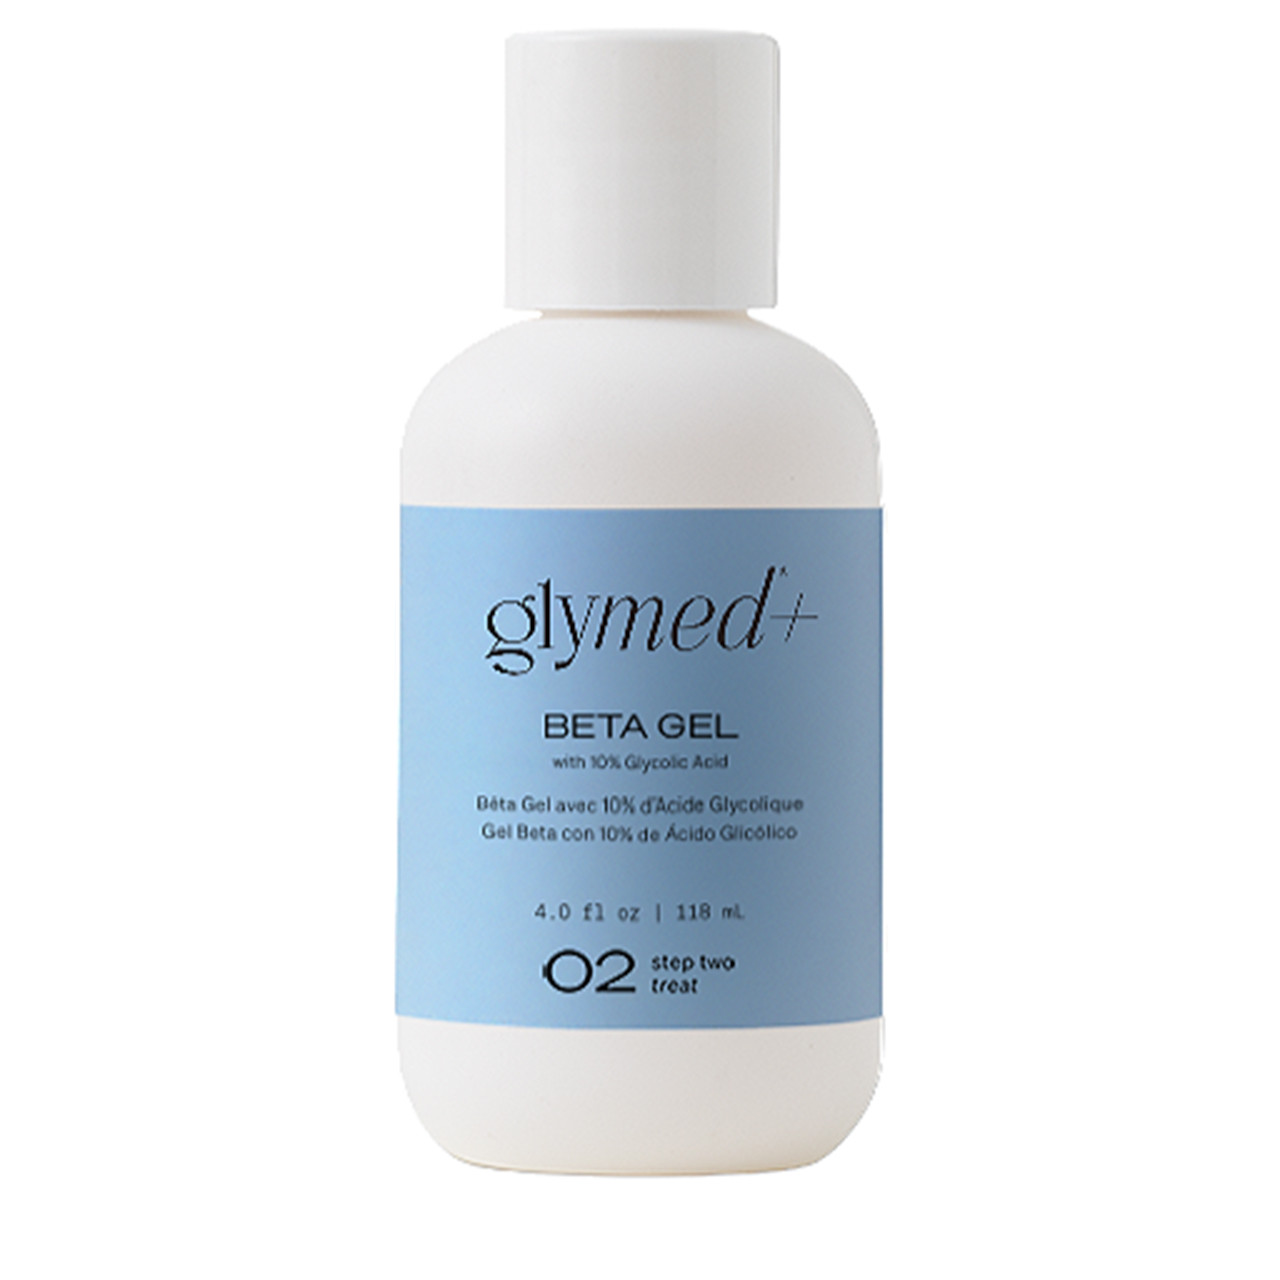 Glymed Plus Beta Gel with 10% Glycolic Acid - 4 oz 